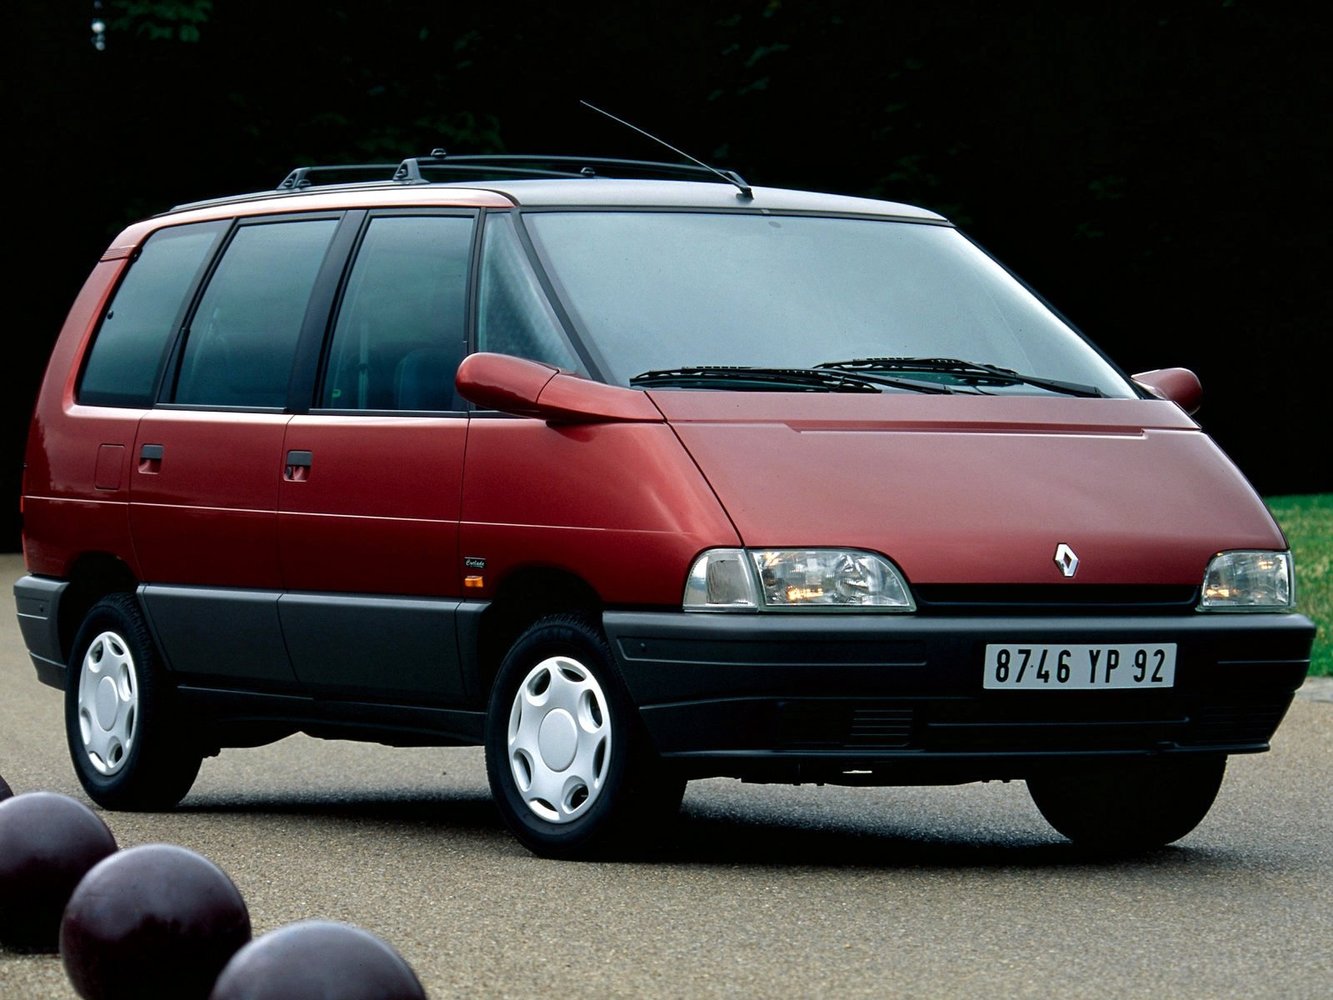 минивэн Renault Espace 1991 - 1996г выпуска модификация 2.0 AT (103 л.с.)